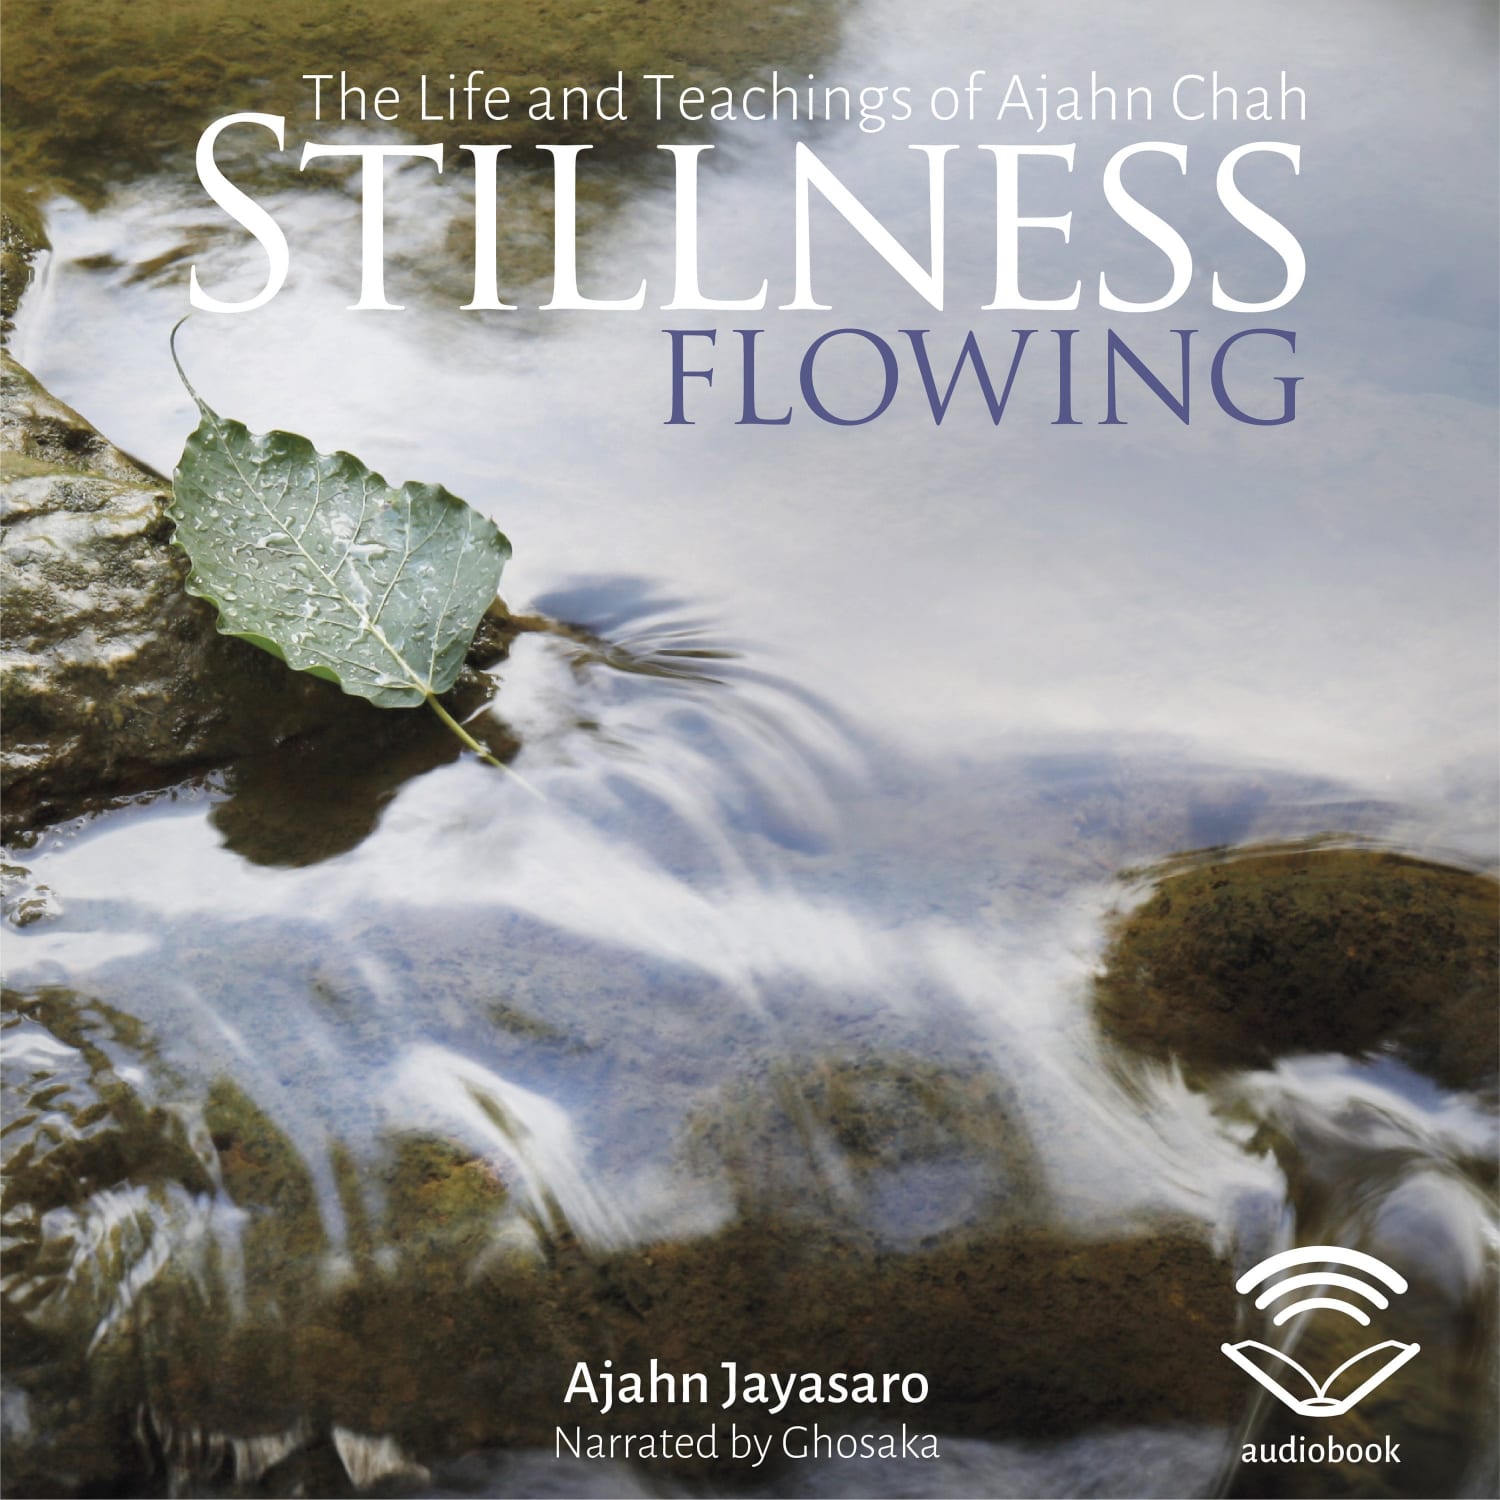 Ajahn Chah Biography, Stillness Flowing, (human) audio recording finally finished